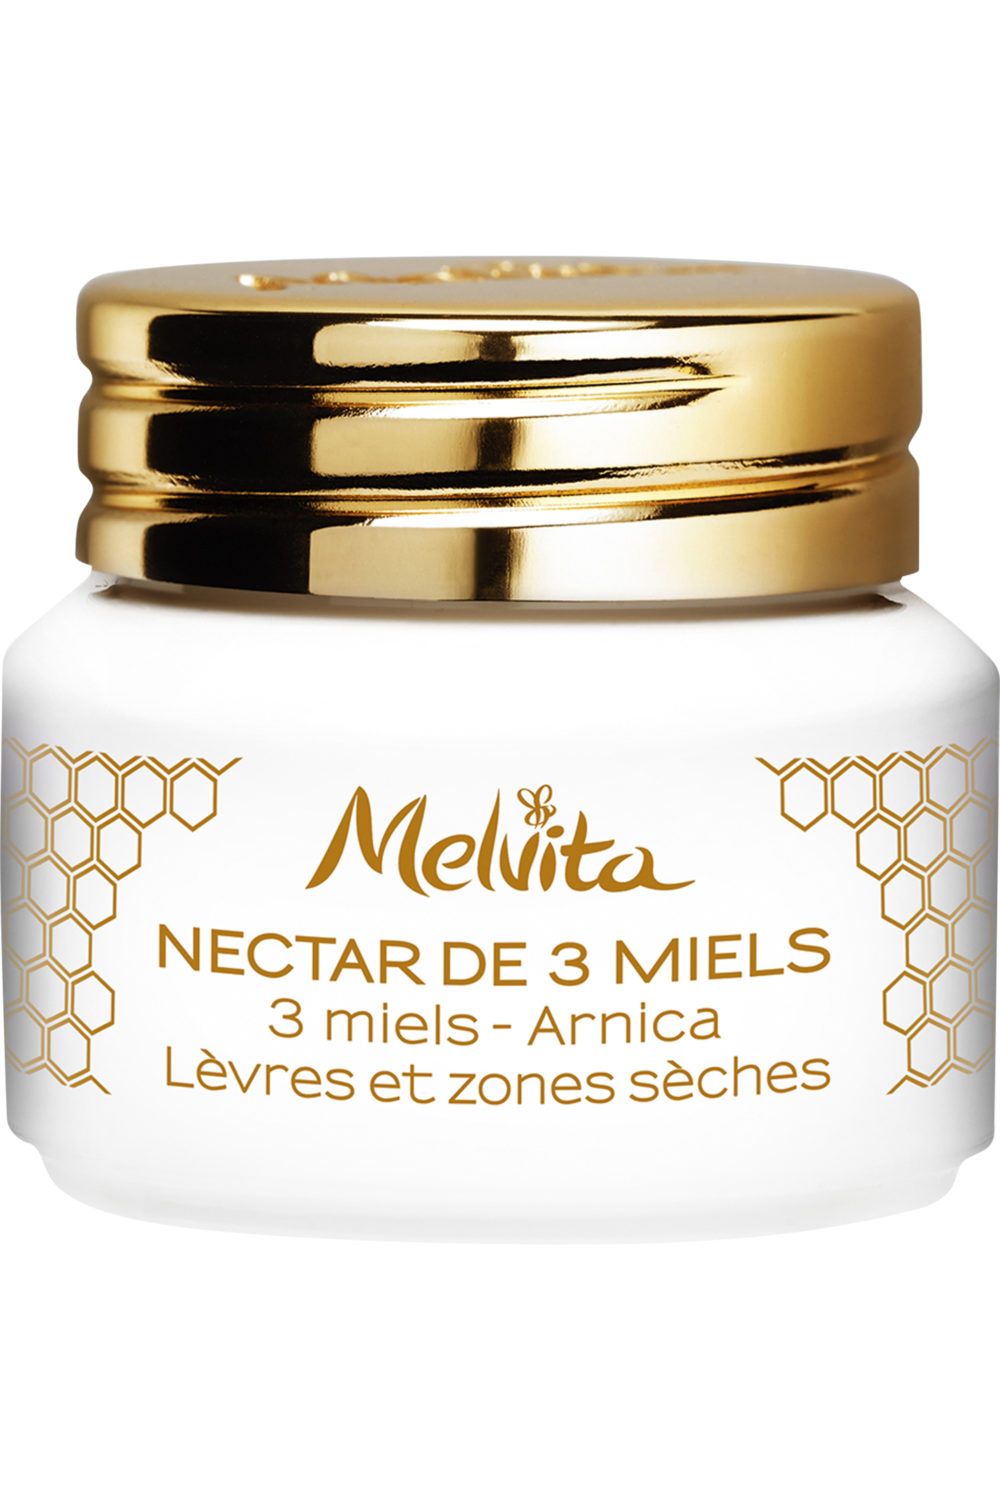 Melvita - Nectar de 3 miels